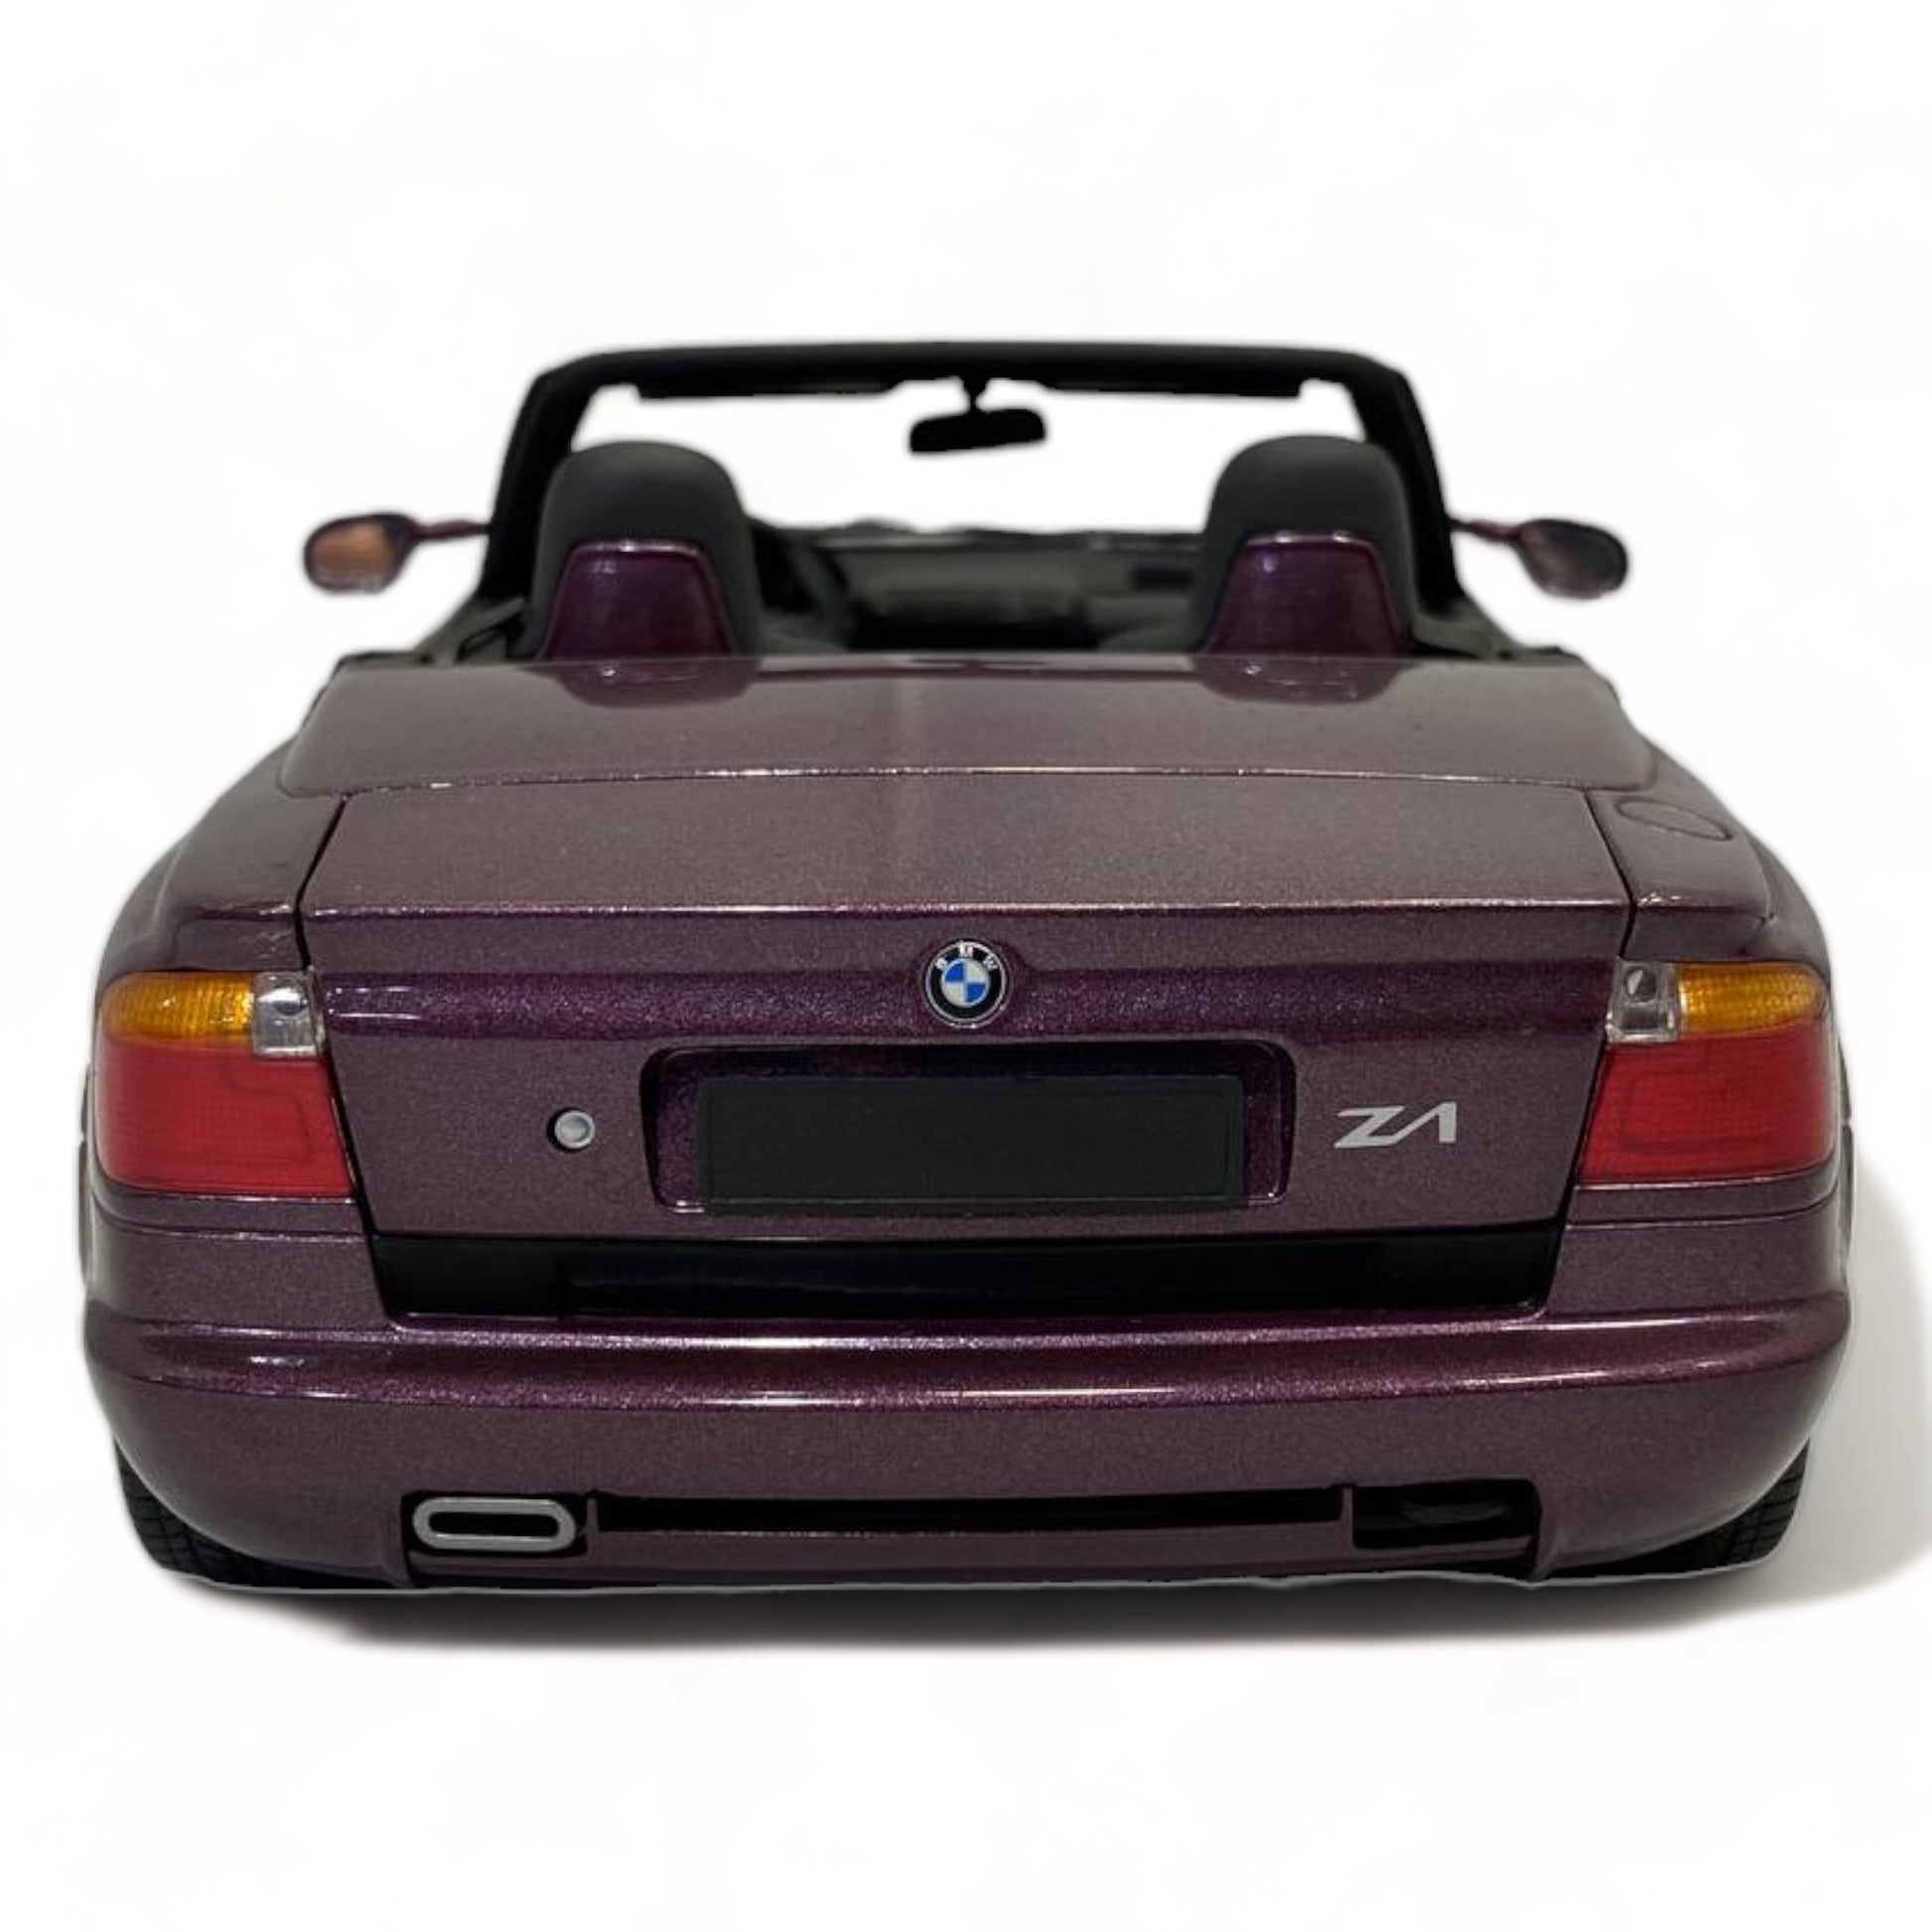 Minichamps BMW Z1 - Purple (1988, 1/18 Scale)|Sold in Dturman.com Dubai UAE.